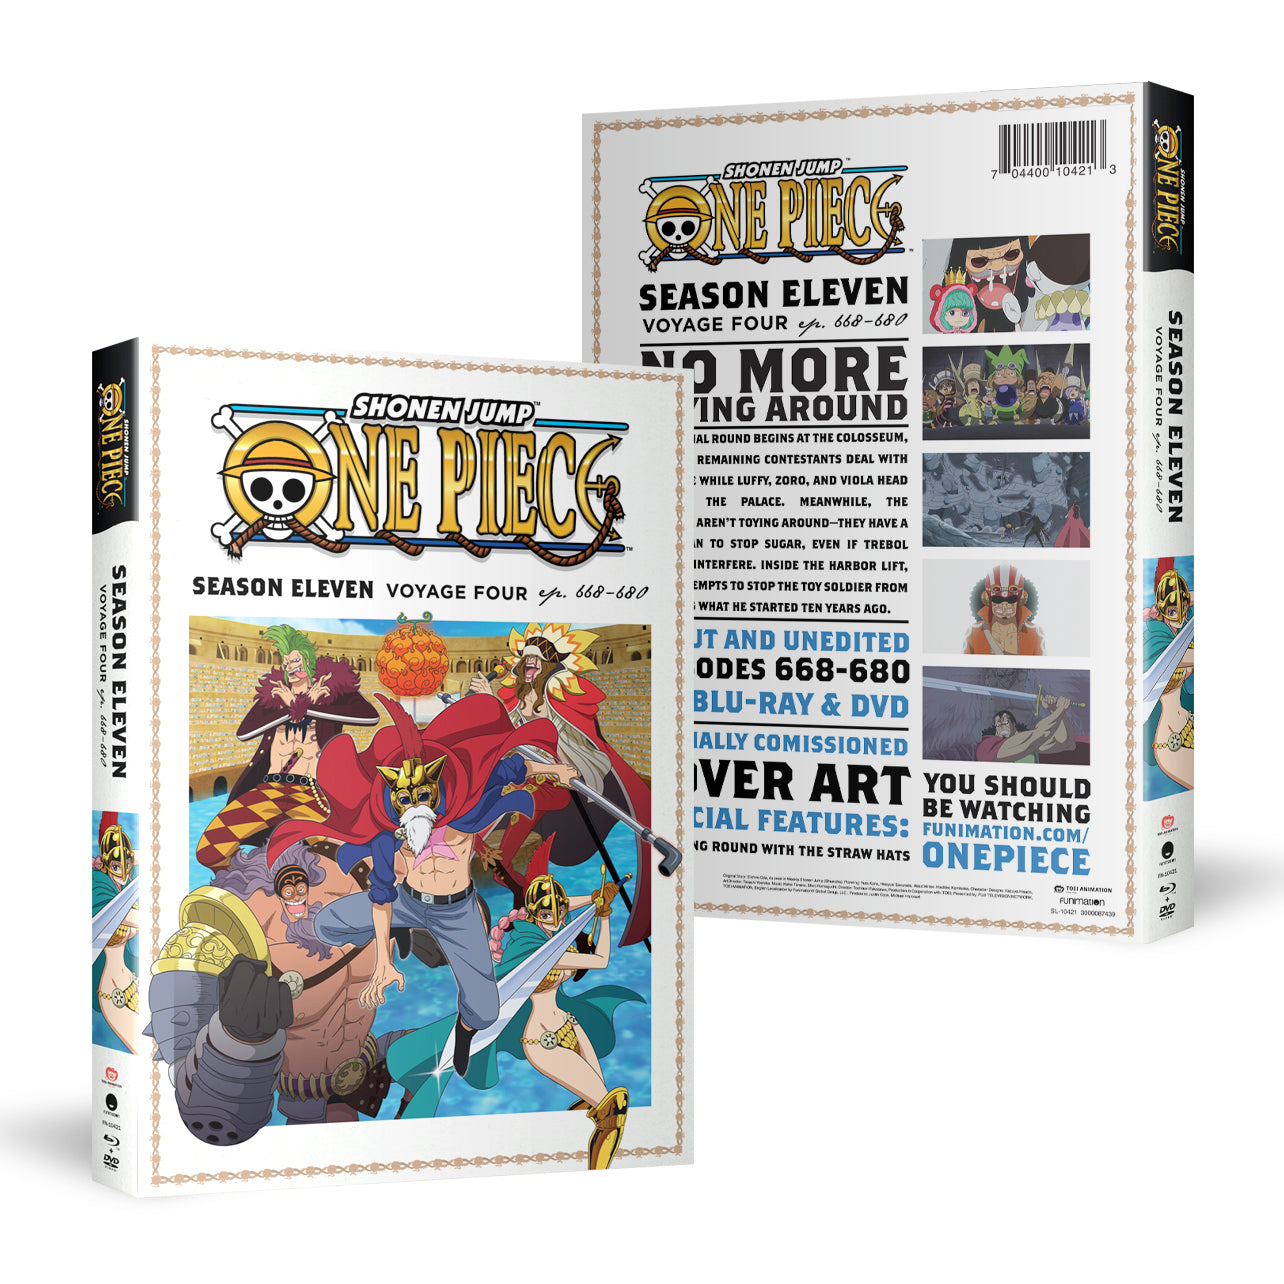 One Piece - Season Eleven Voyage Four - BD/DVD image count 1